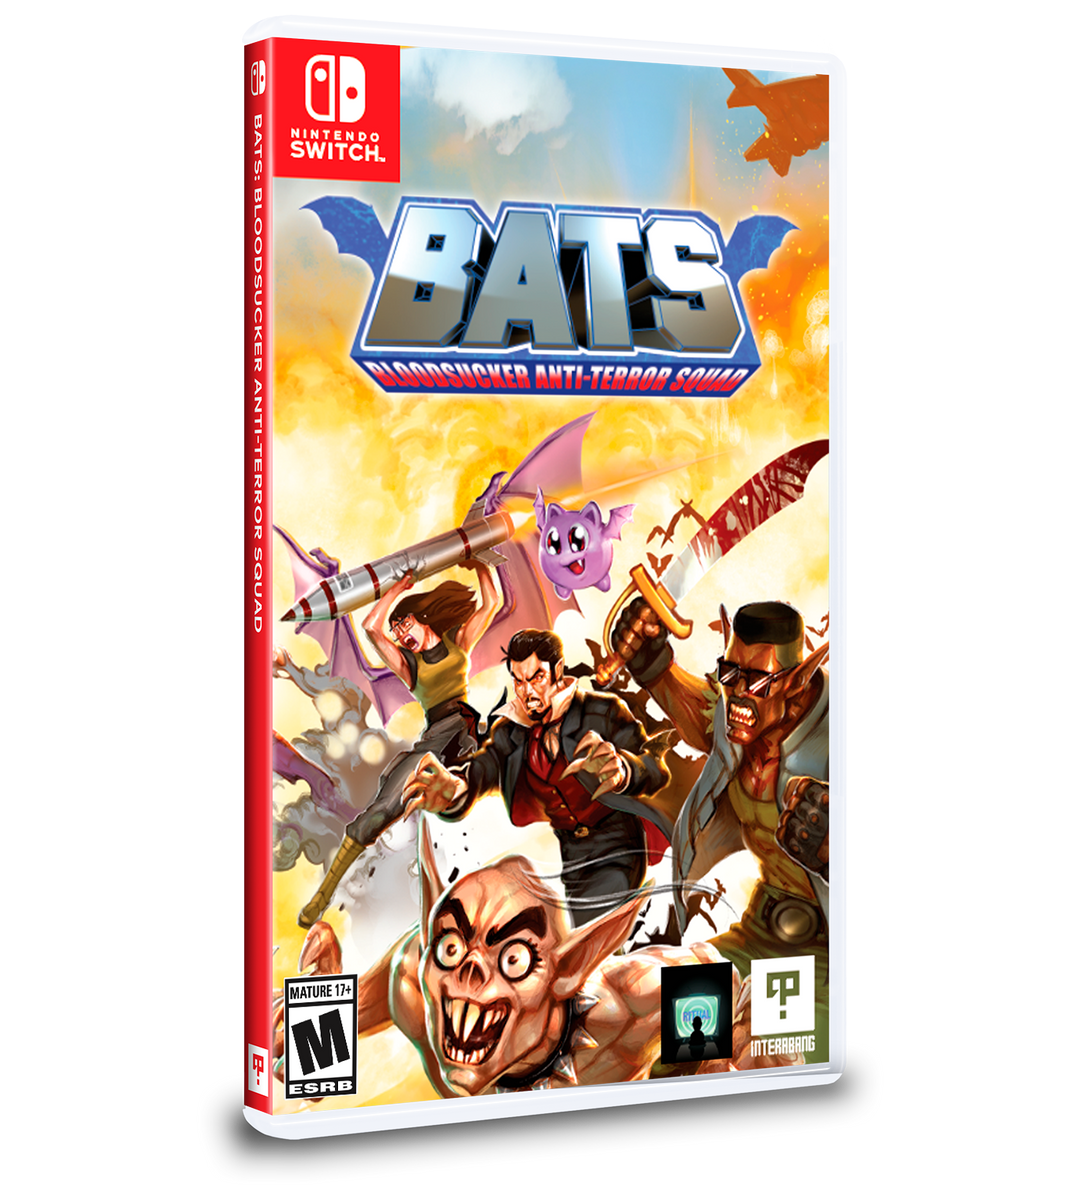 BATS: Bloodsucker Anti-Terror Squad (Switch) – Limited Run Games